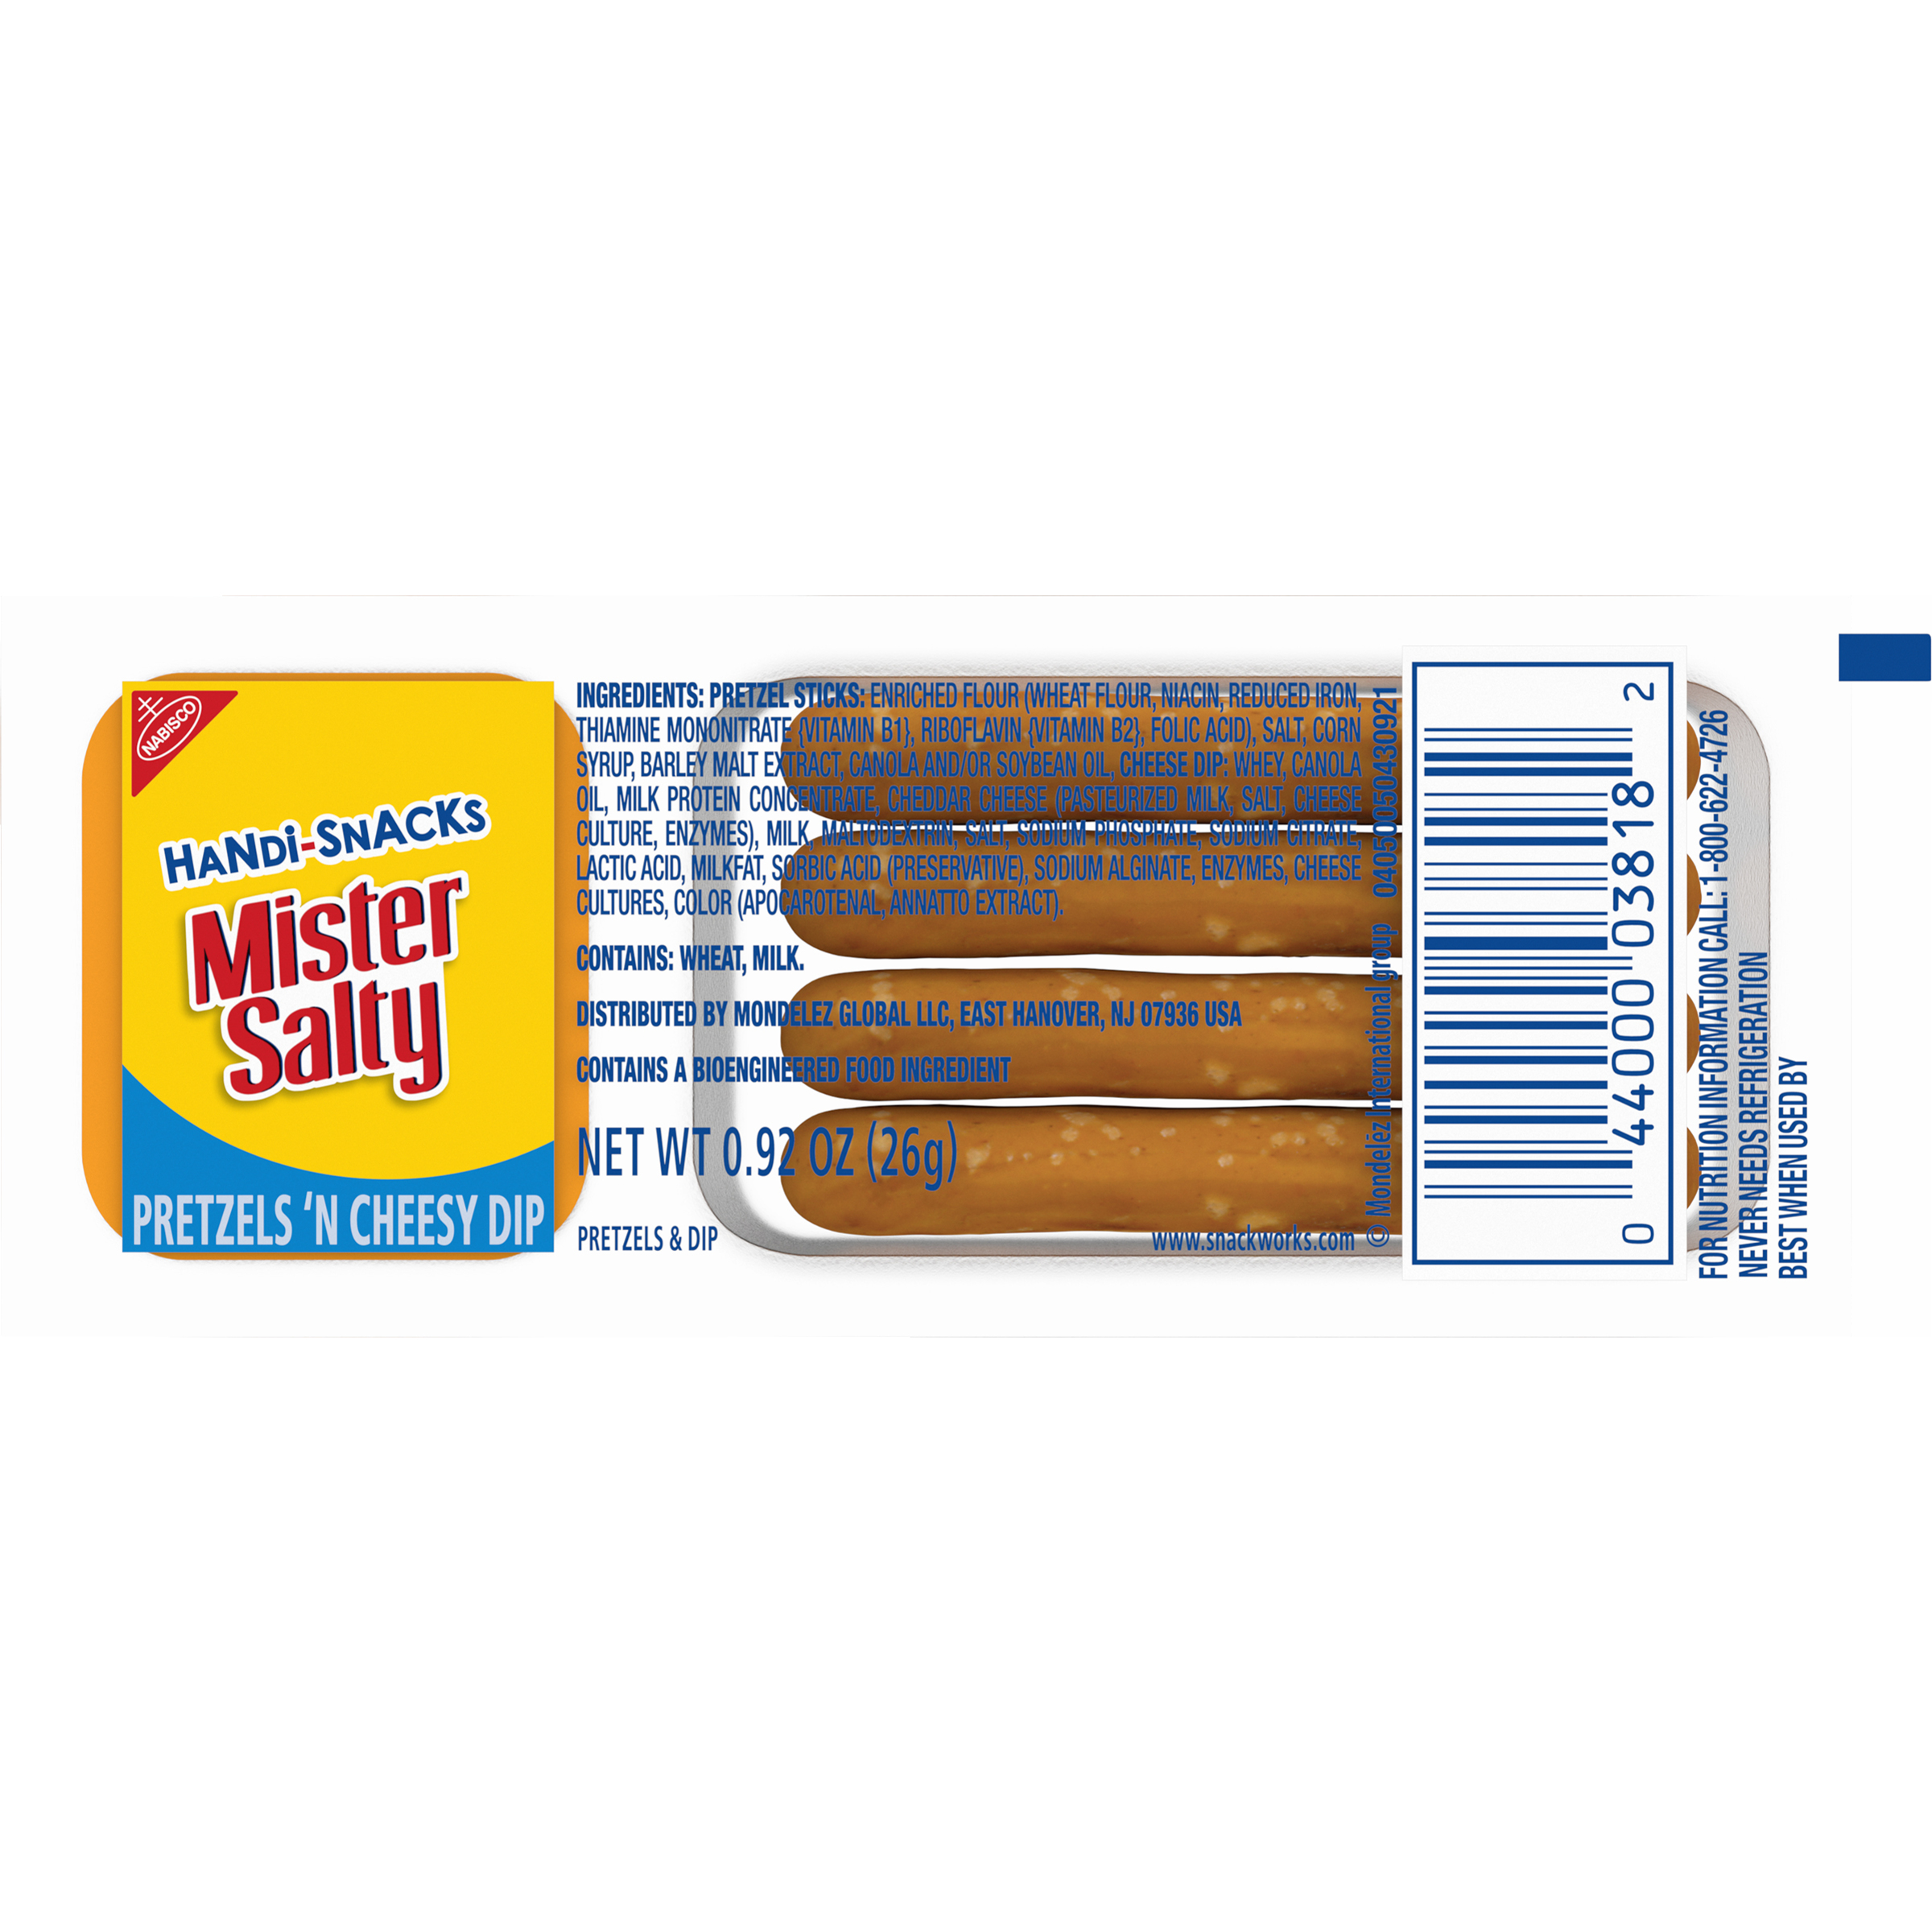 Handi-Snacks Mister Salty Pretzels 'N Cheesy Dip Snack Pack, .92 oz-1